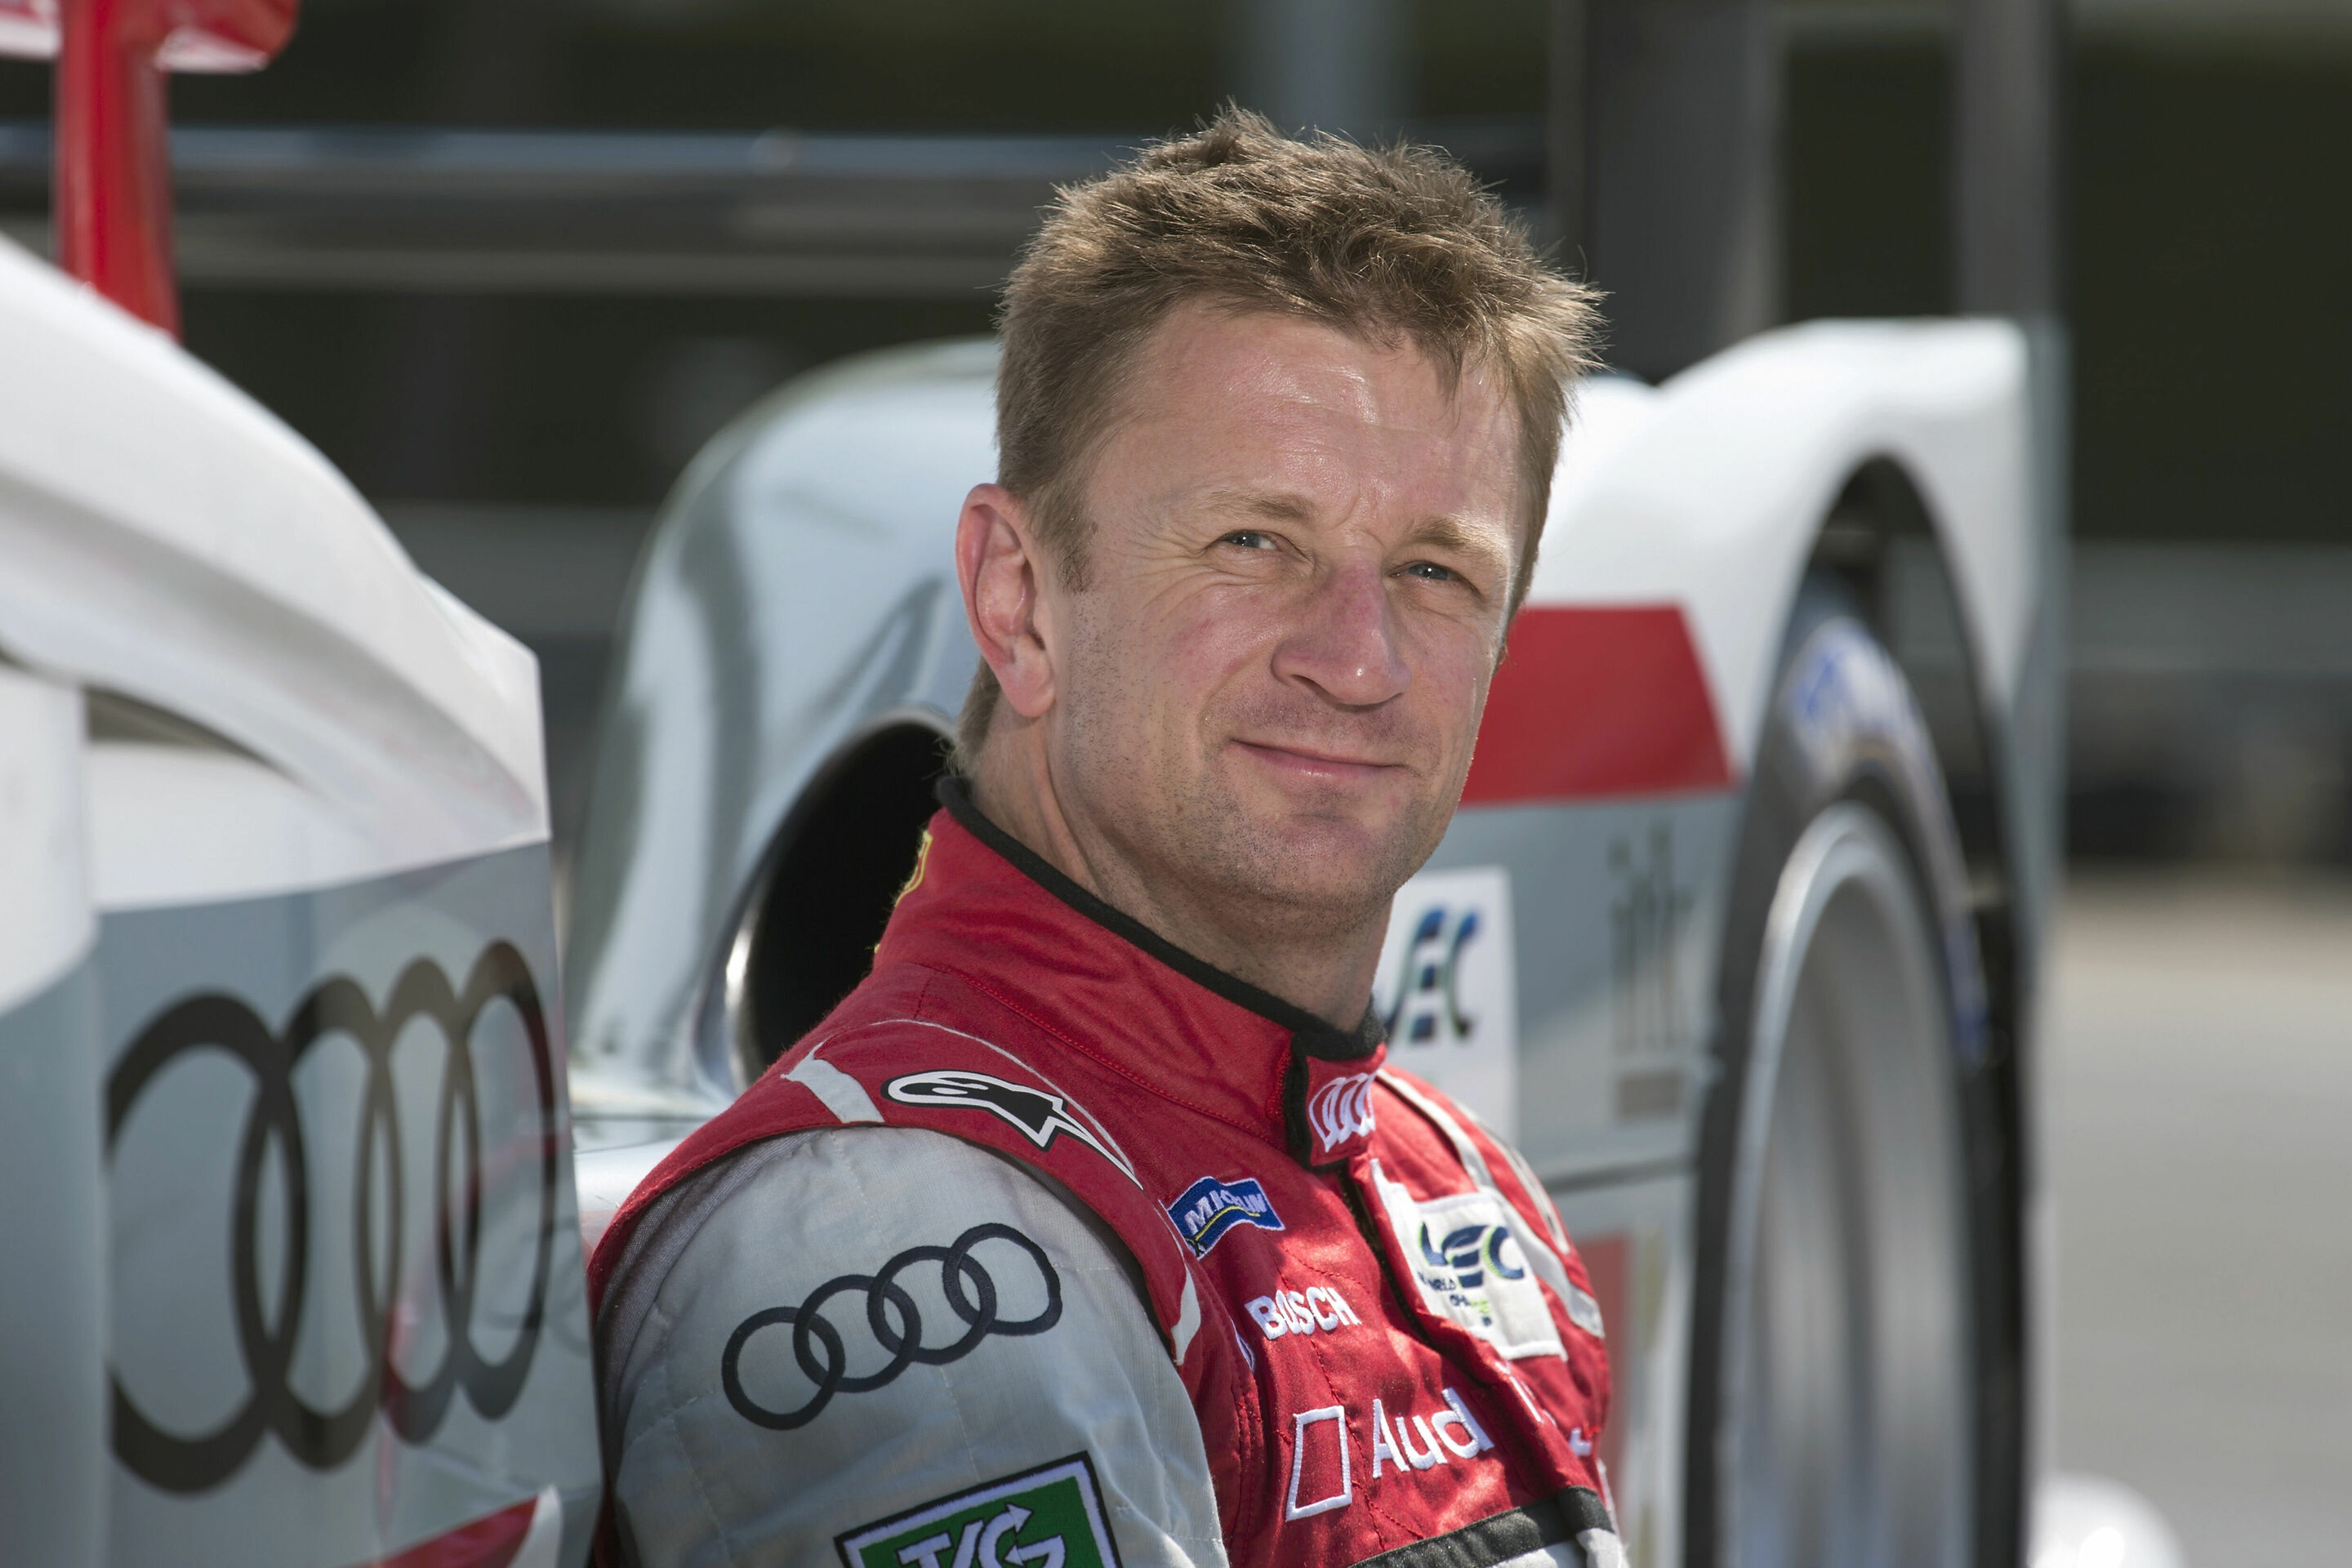 Audi driver Allan McNish ends LMP career